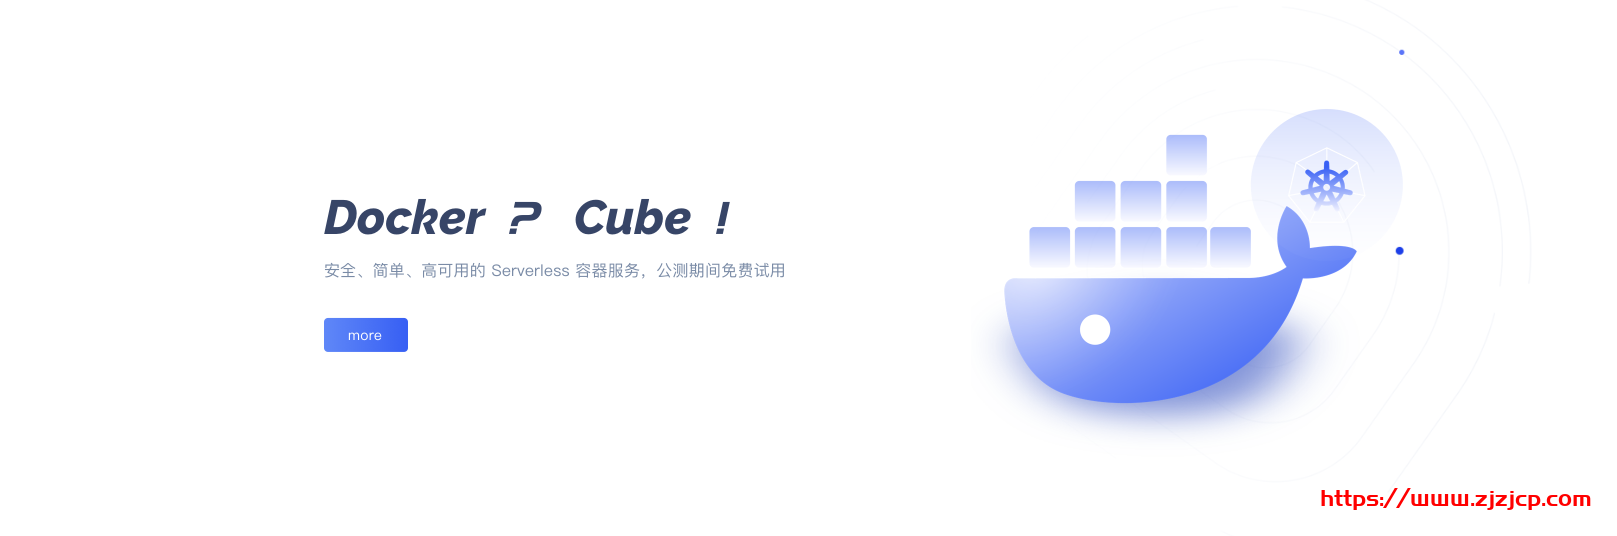 UCloud 优刻得 Serverless 容器服务产品 Cube 免费公测